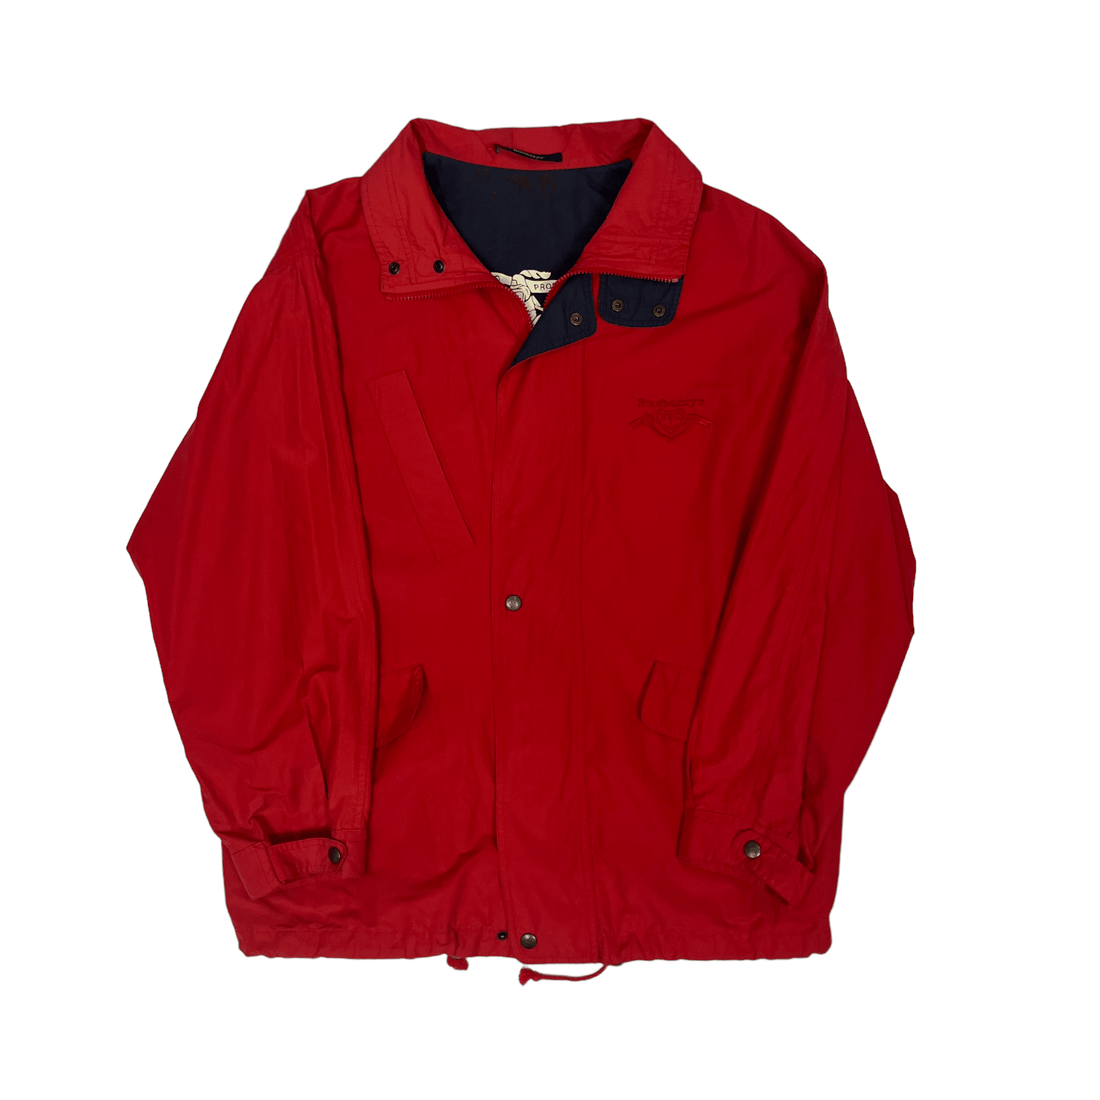 Vintage 90s Red Burberry Jacket - Large - The Streetwear Studio